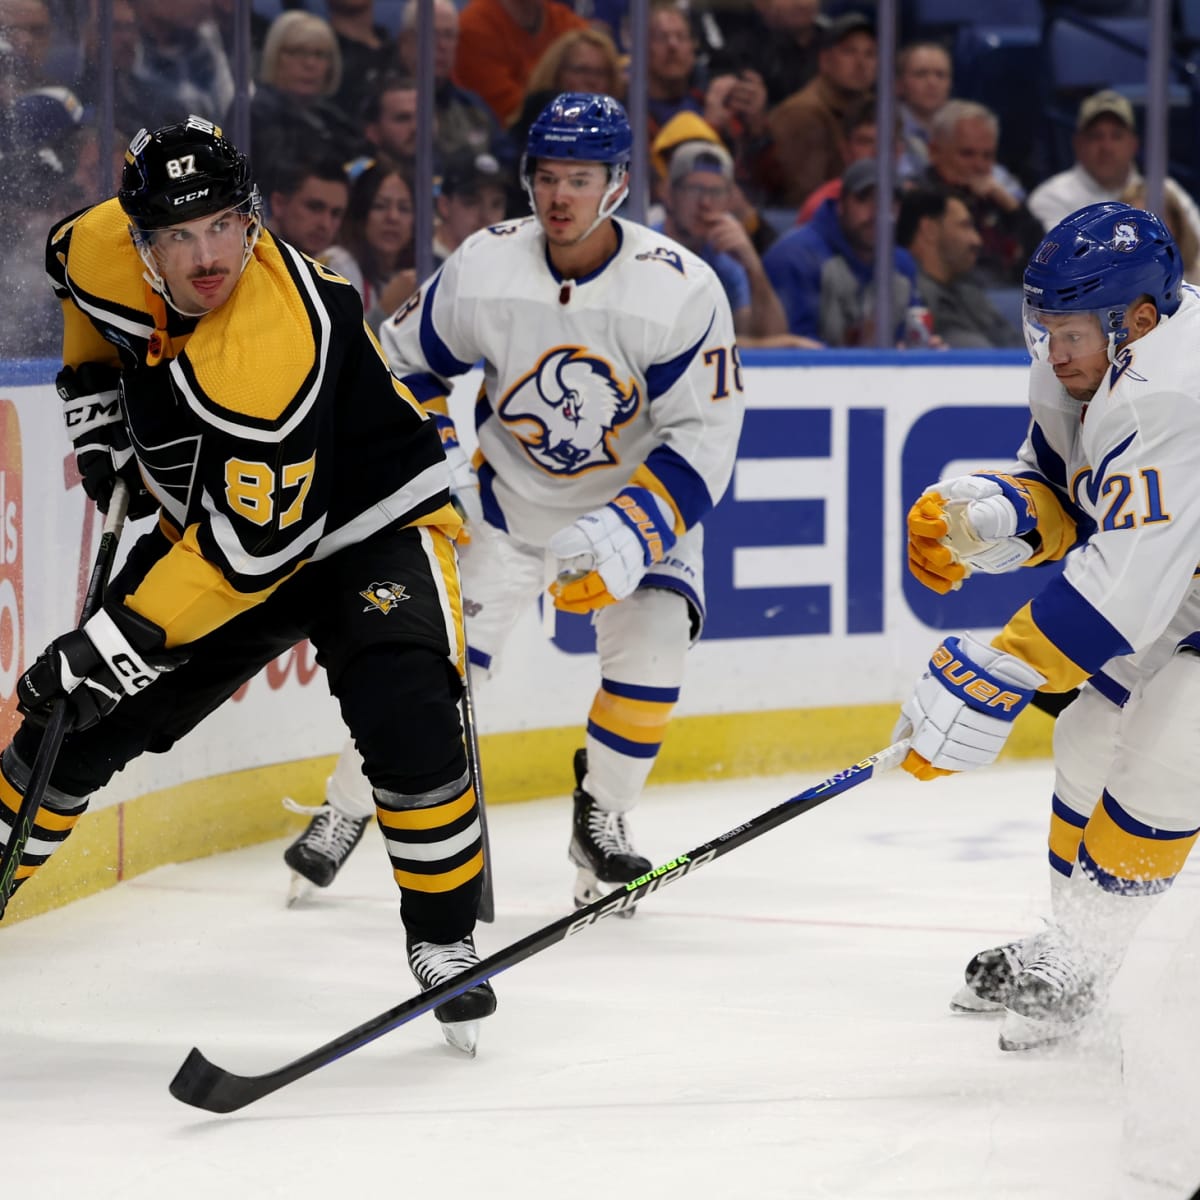 Pittsburgh Penguins Great Jaromir Jagr Approves of Jason Zucker's Salute  Celebration - The Hockey News Pittsburgh Penguins News, Analysis and More